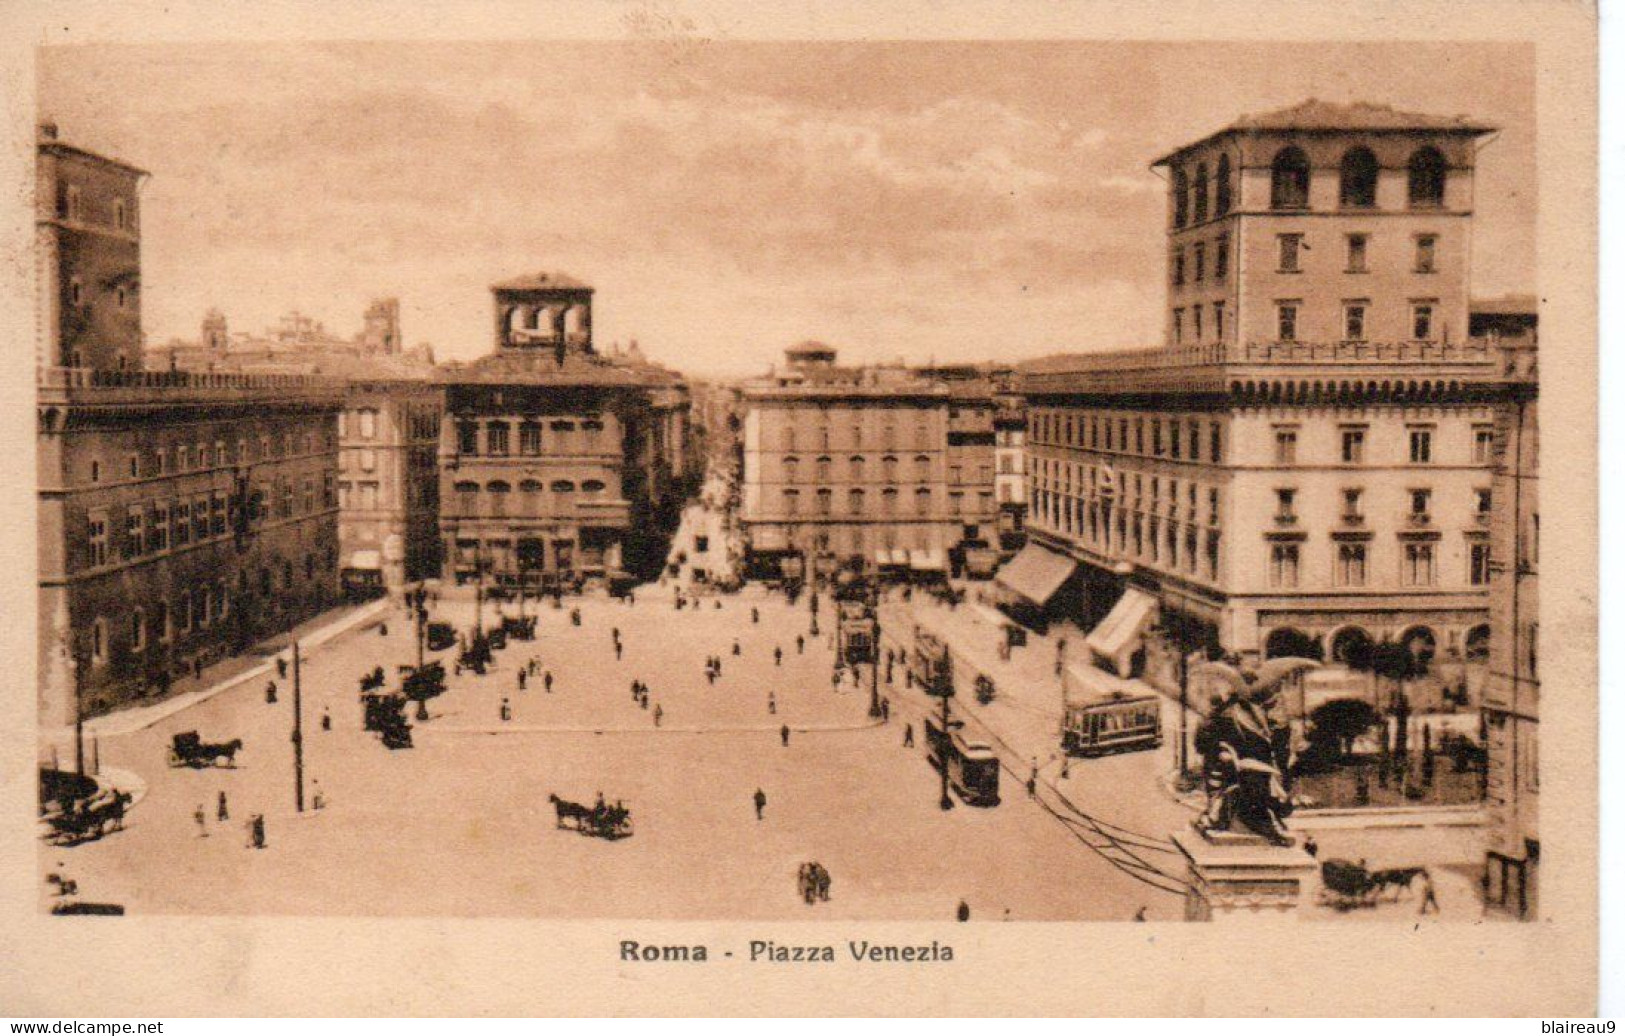 Piazza Venezia - Andere Monumente & Gebäude